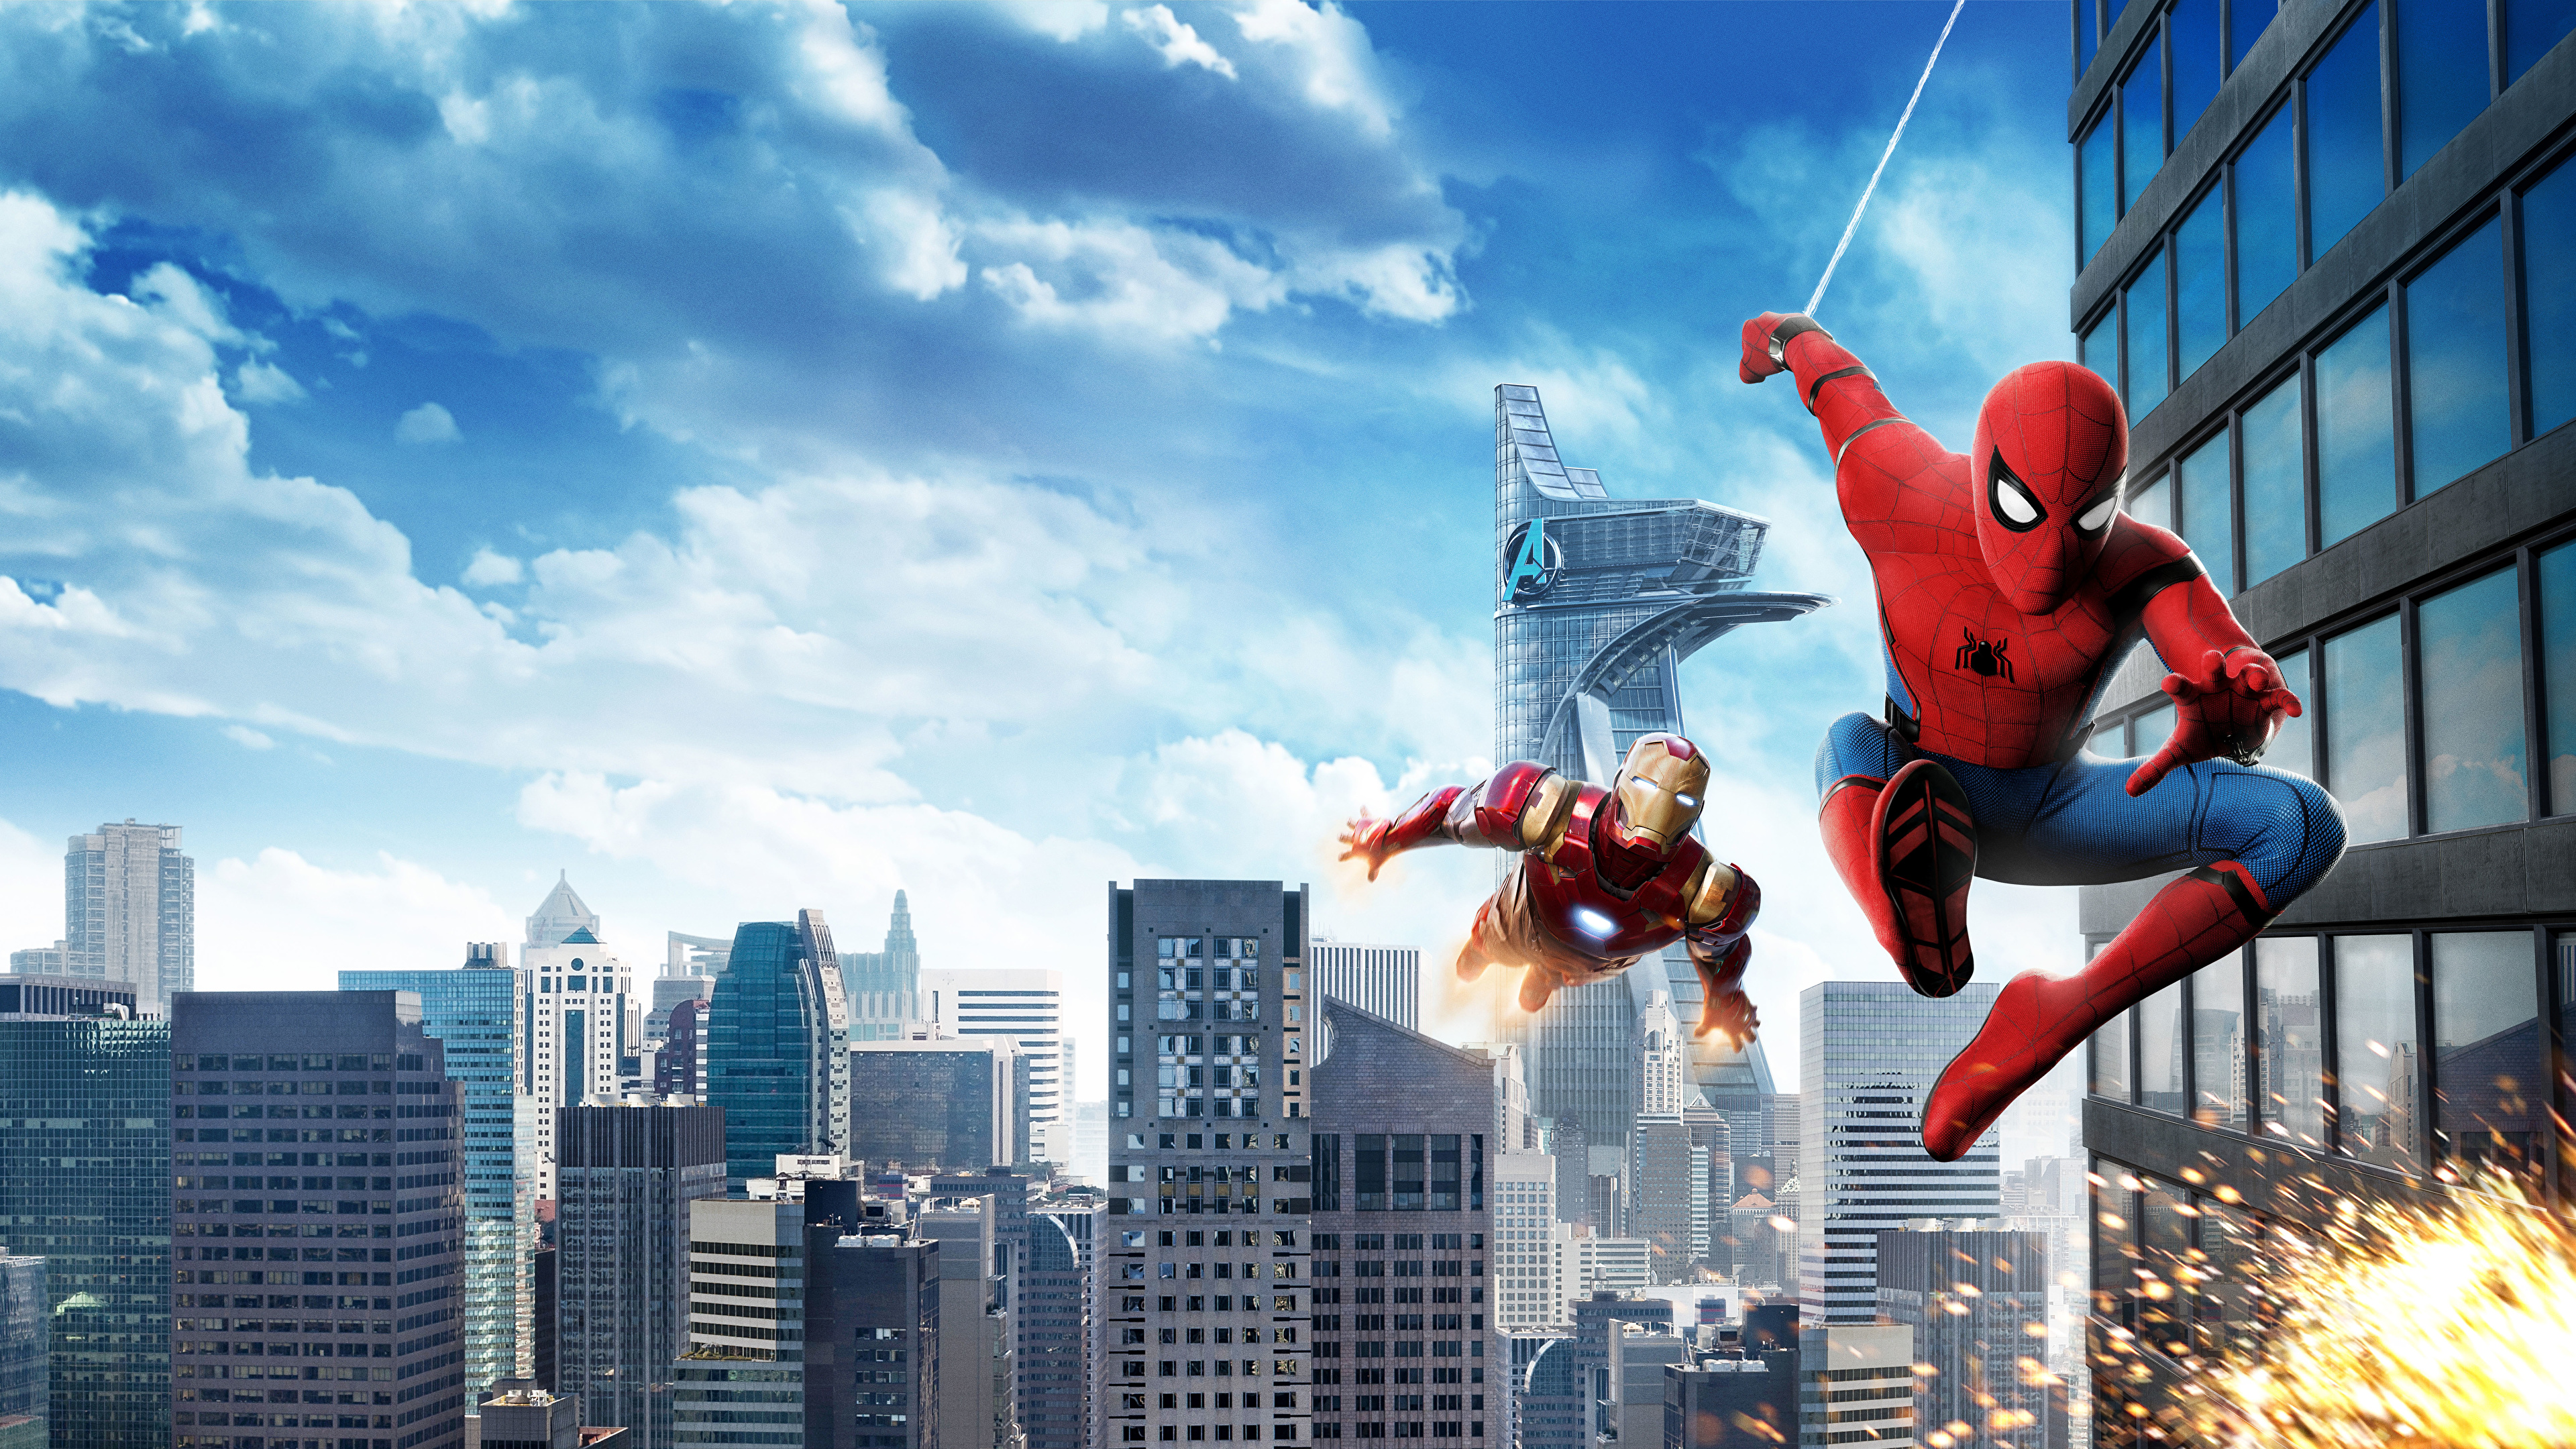 Wallpaper Iron Man Spider-Man: Homecoming Heroes comics 3840x2160